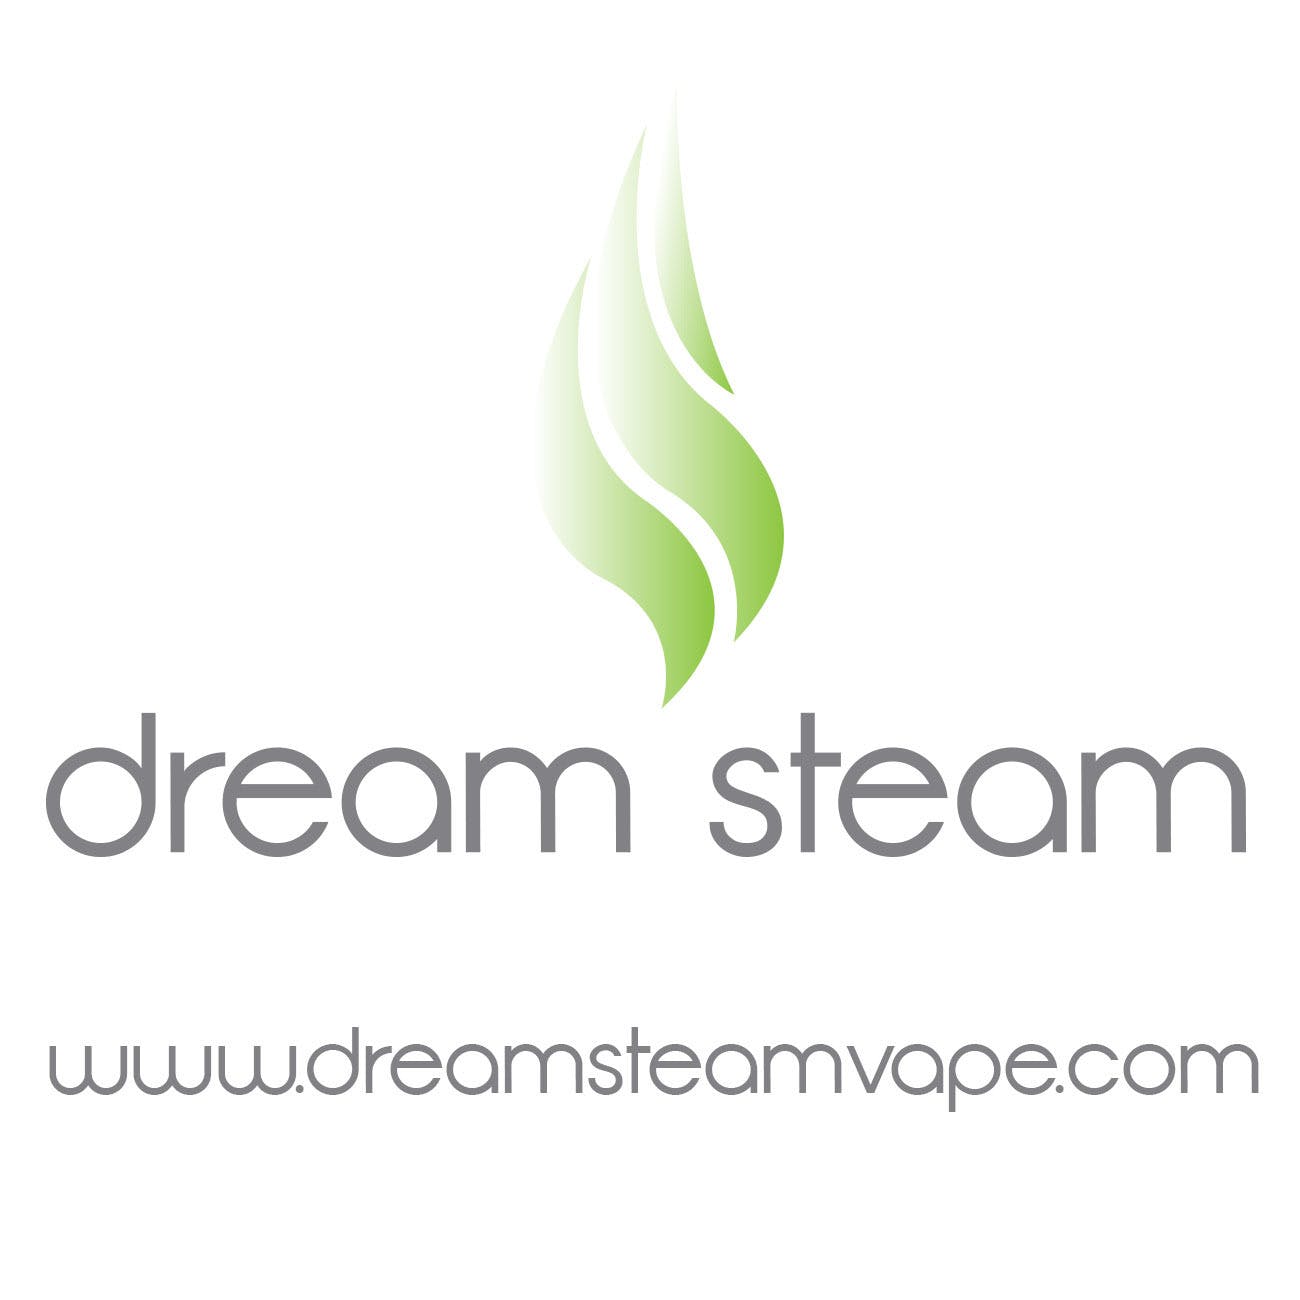 concentrate-dream-steam-tru-terps-fire-og